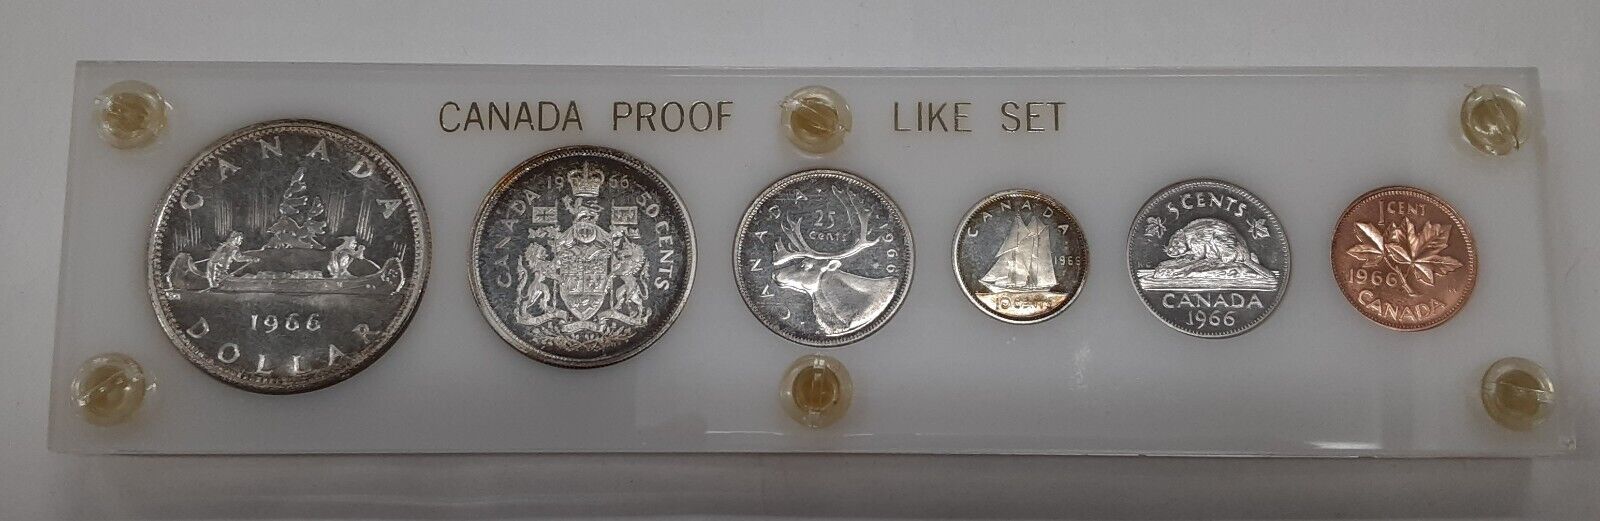 1966 Canada 6 Coin Mint Set Queen Elizabeth II BU in White Acrylic Holder